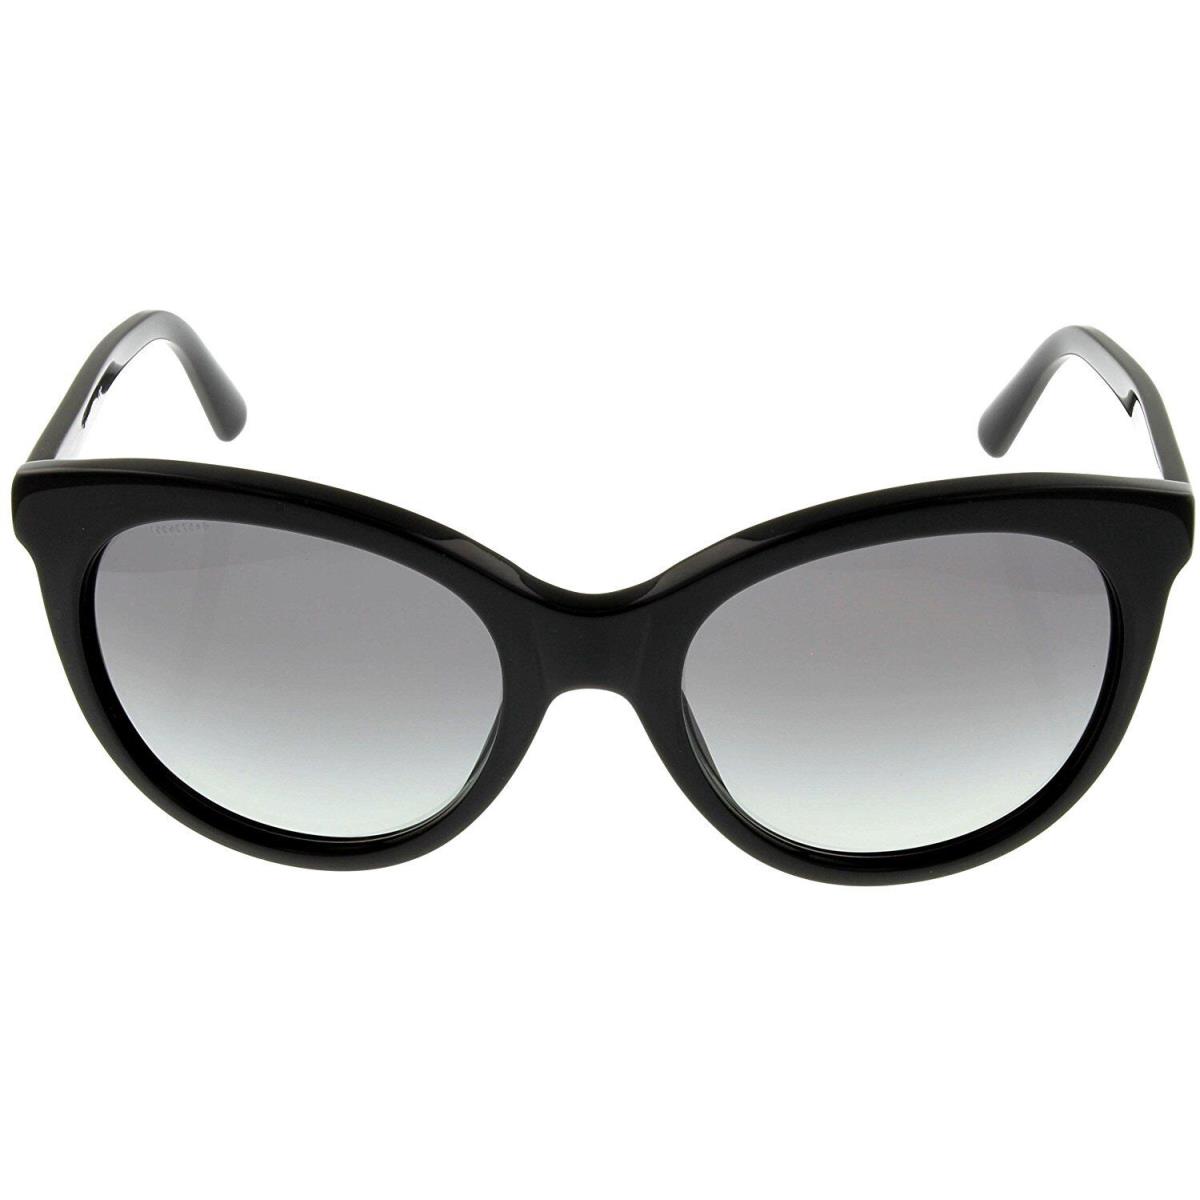 Giorgio Armani Sunglasses Women Black Oval AR8041 501711 Fashion